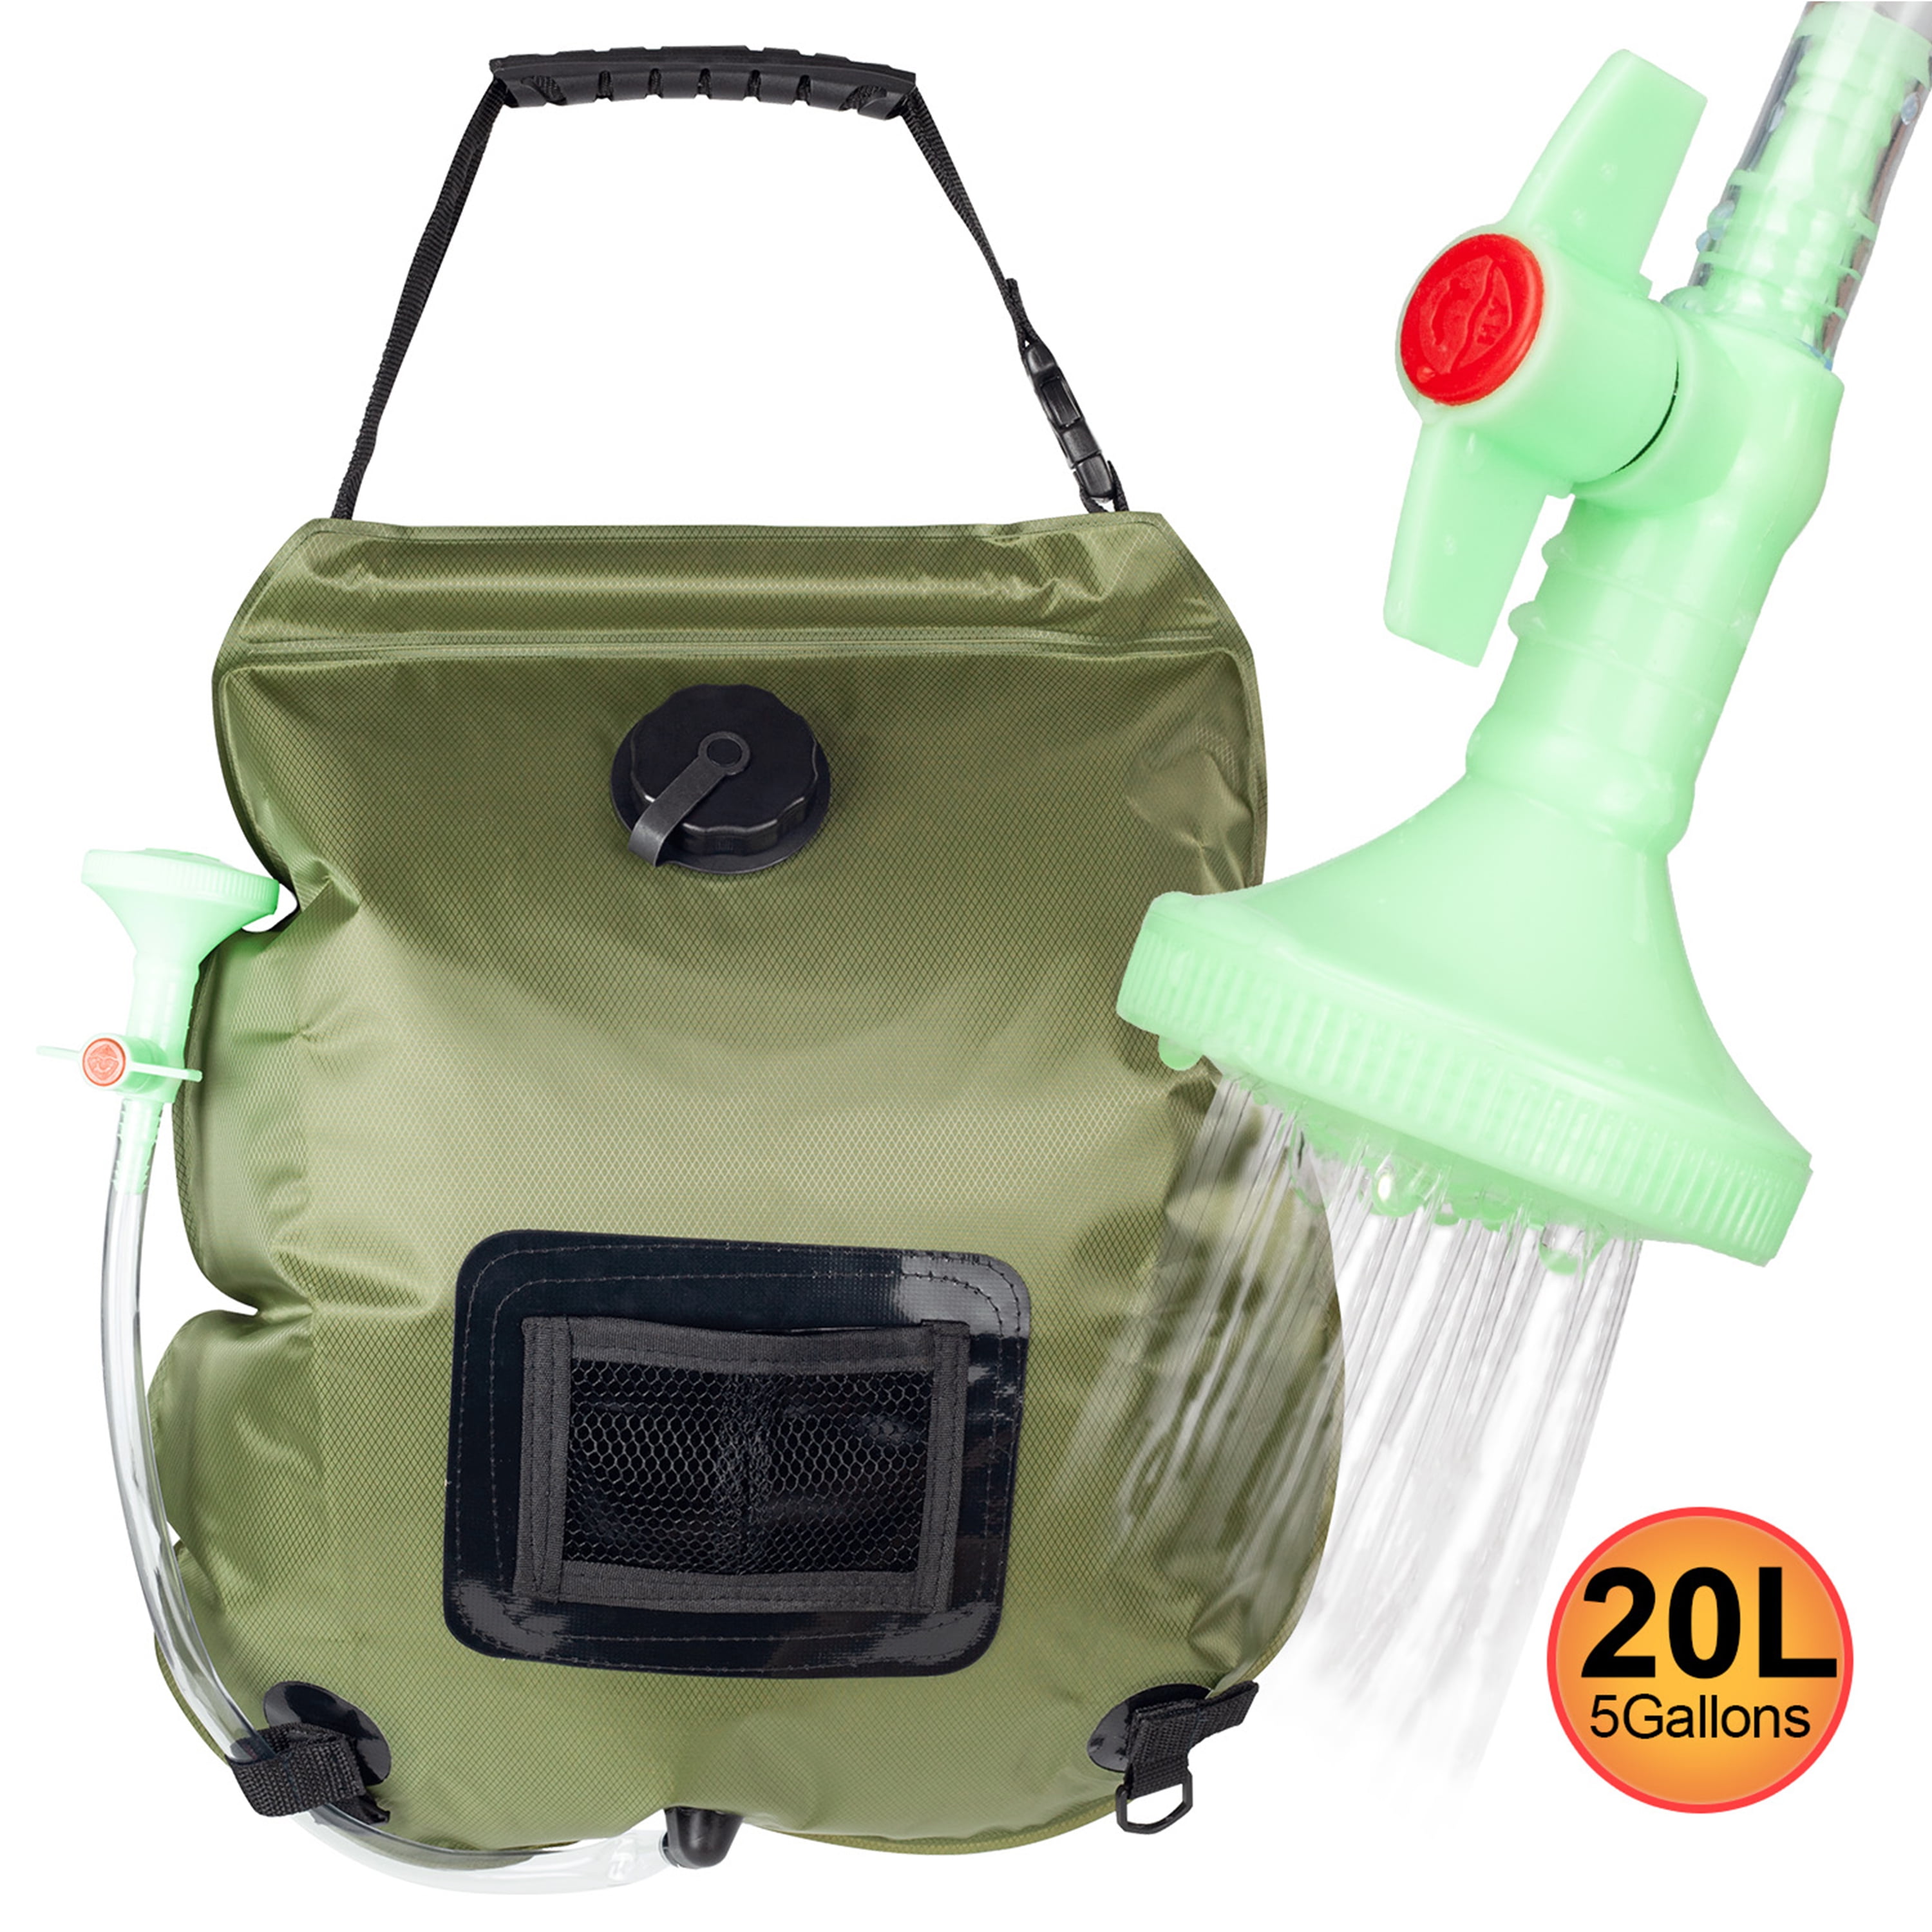 Solar Camping Shower Bag 20L Portable Solar Heated Travel Shower Bag Foldable Lightweight Traveling Hiking Climbing Outdoor Bathing Bag 